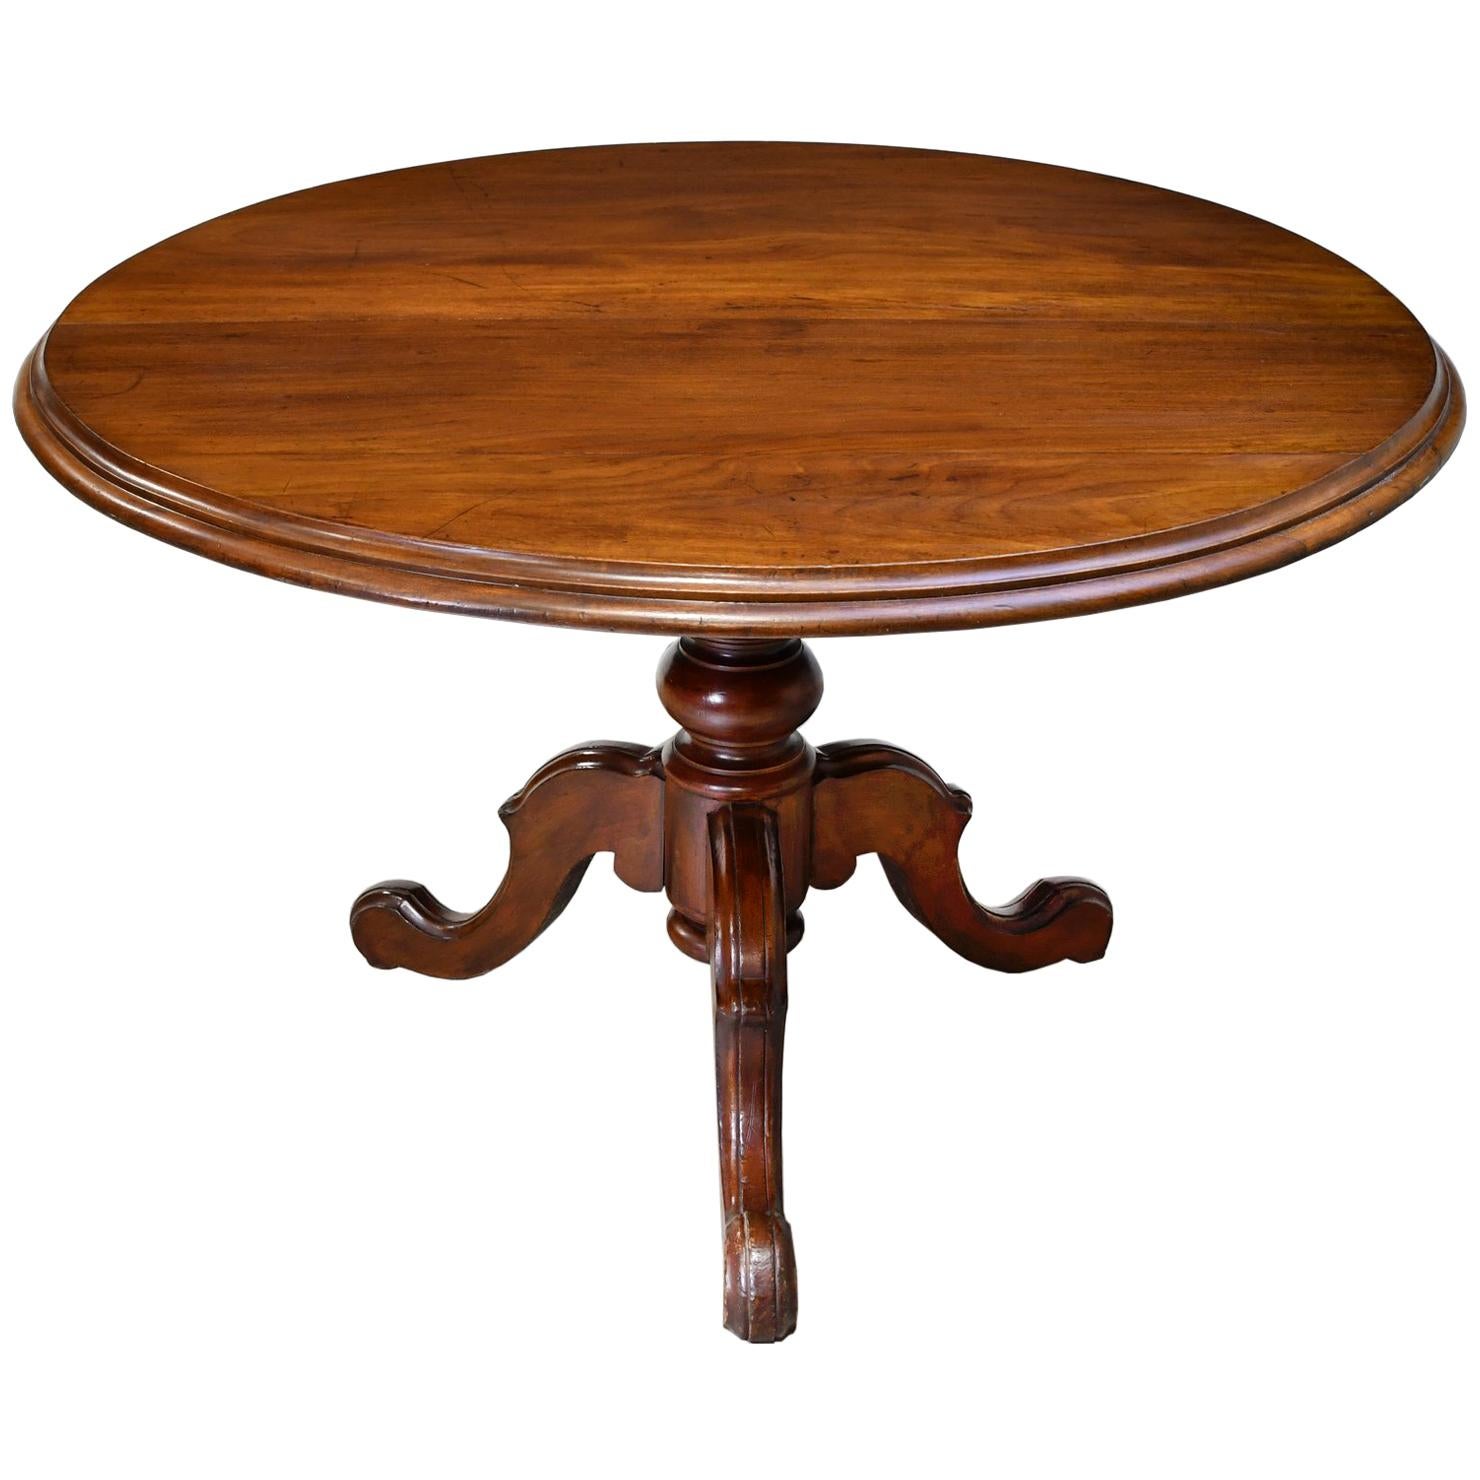 19th Century Round English Tilt-Top Pedestal Table in Walnut